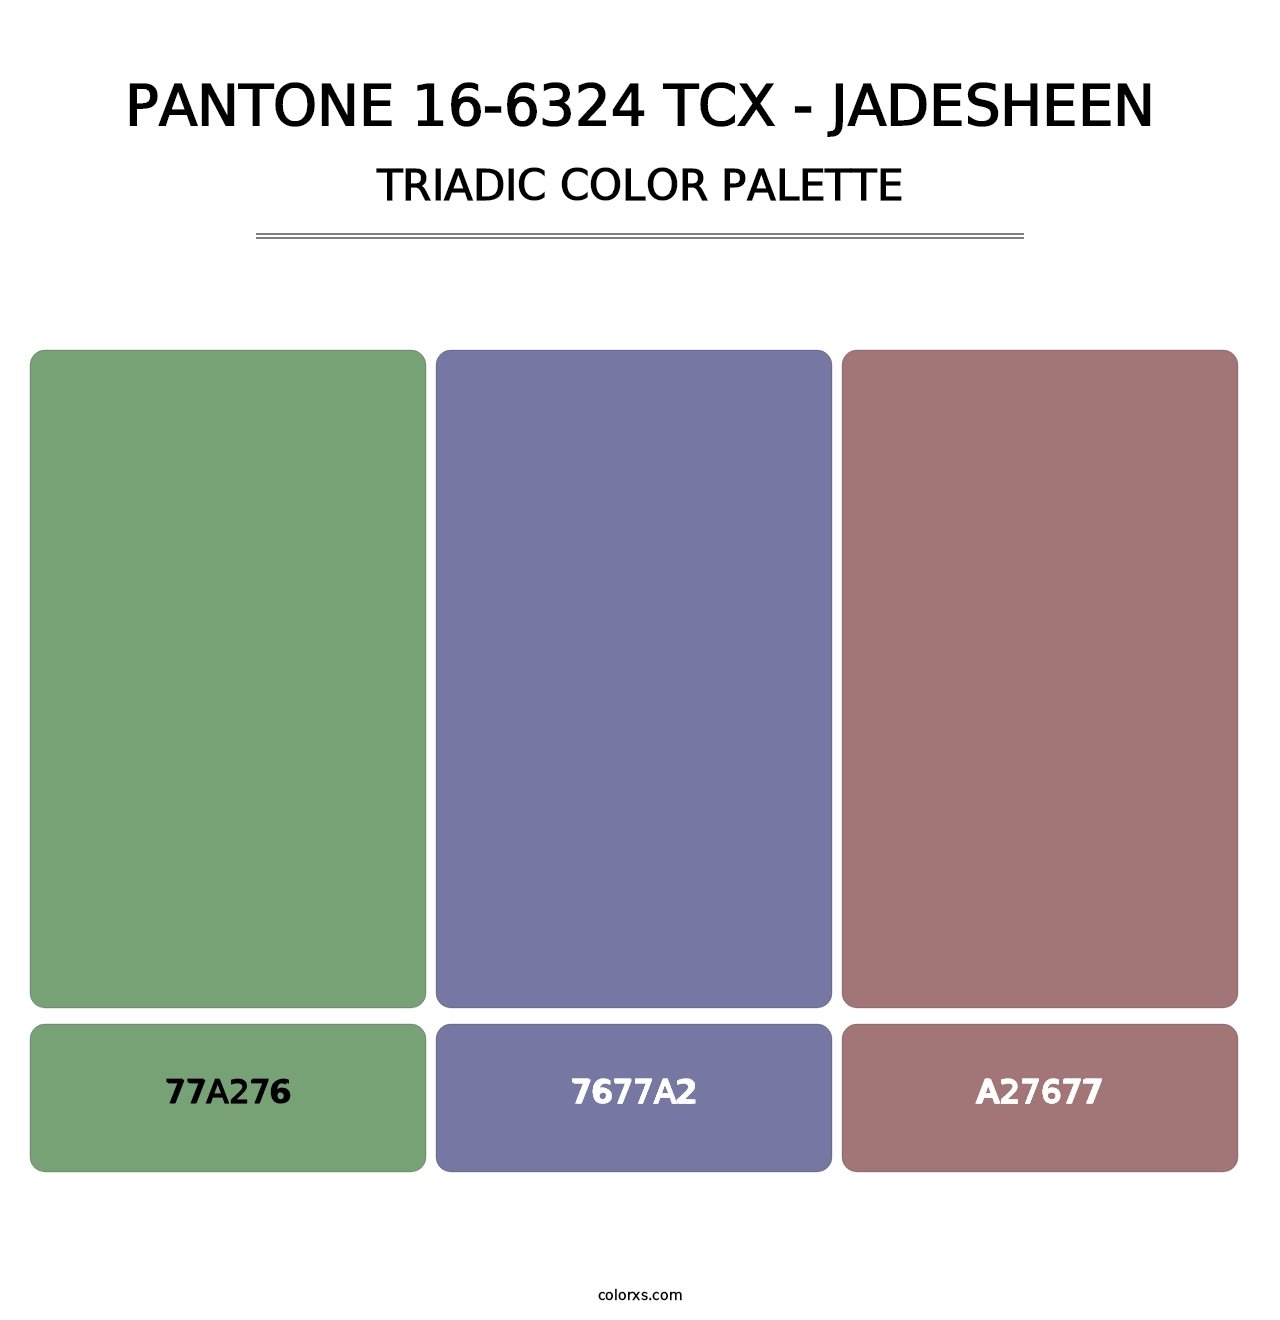 PANTONE 16-6324 TCX - Jadesheen - Triadic Color Palette